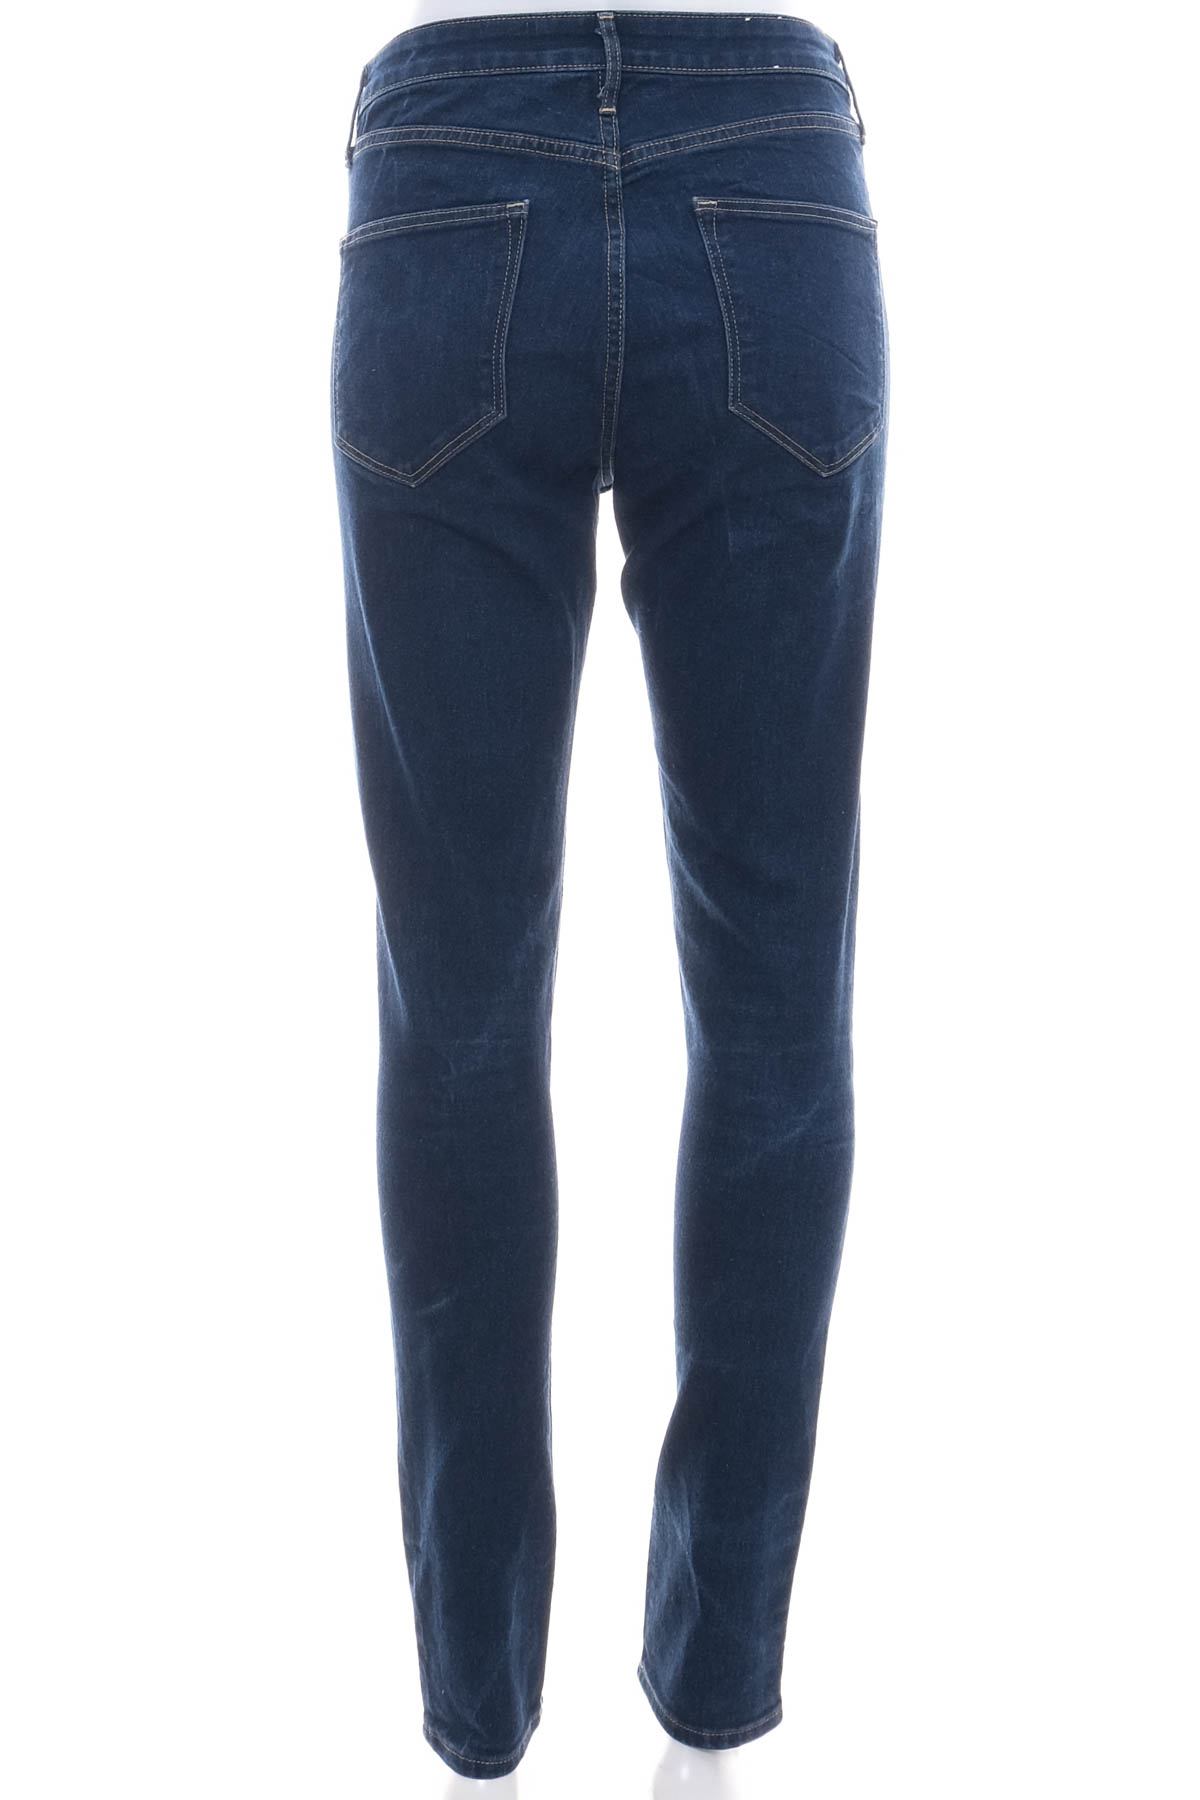 Women's jeans - H&M - 1